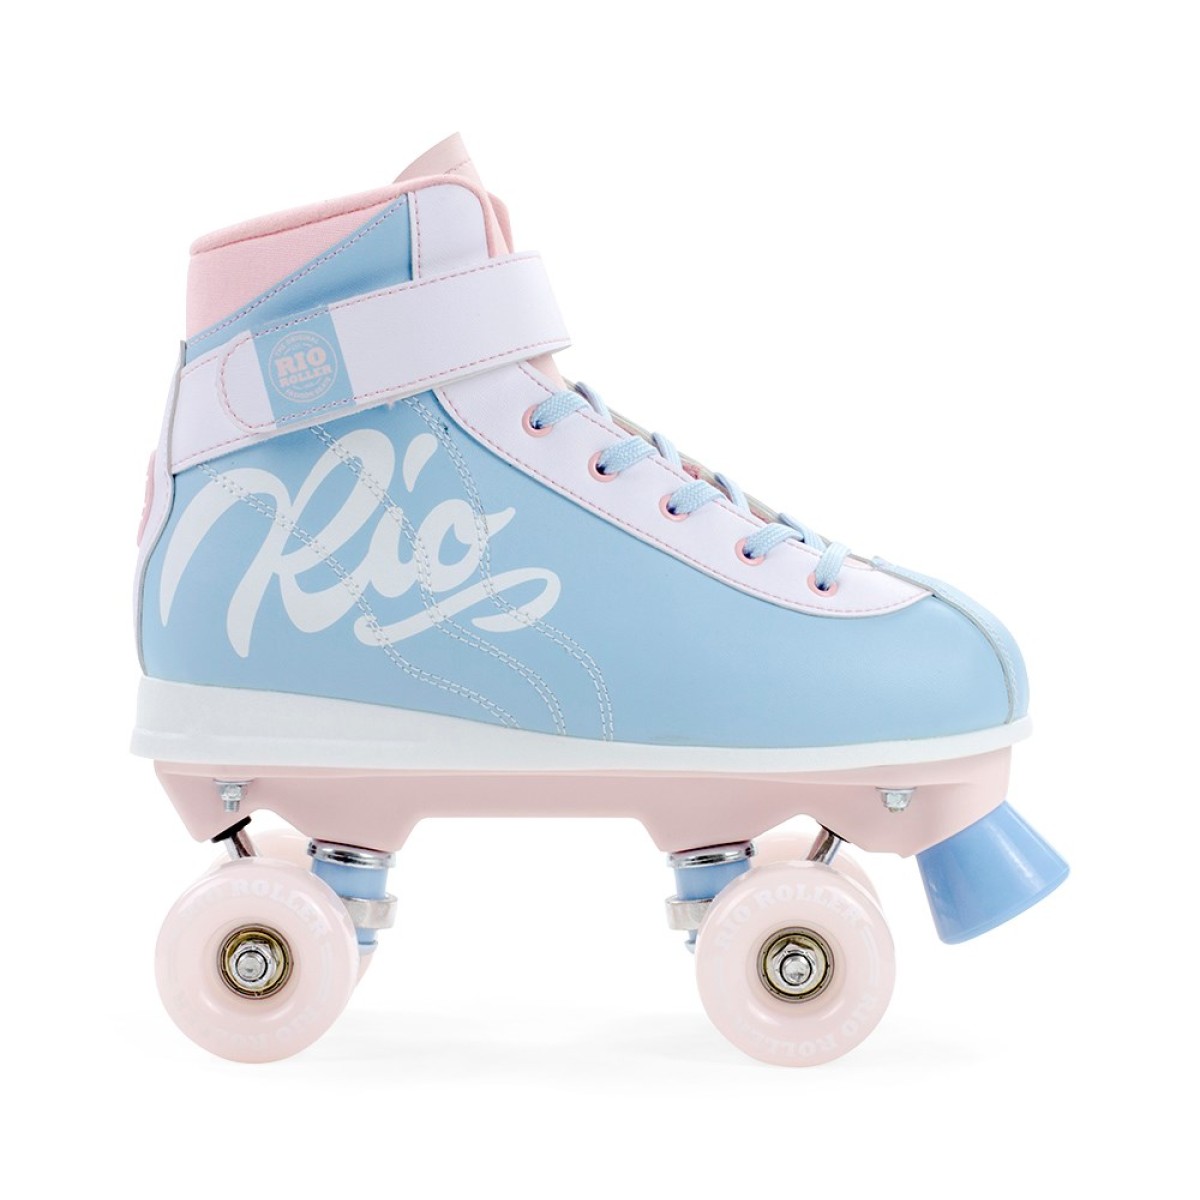 Quad skates Rio Roller Milkshake  RIO ROLLER - view 1